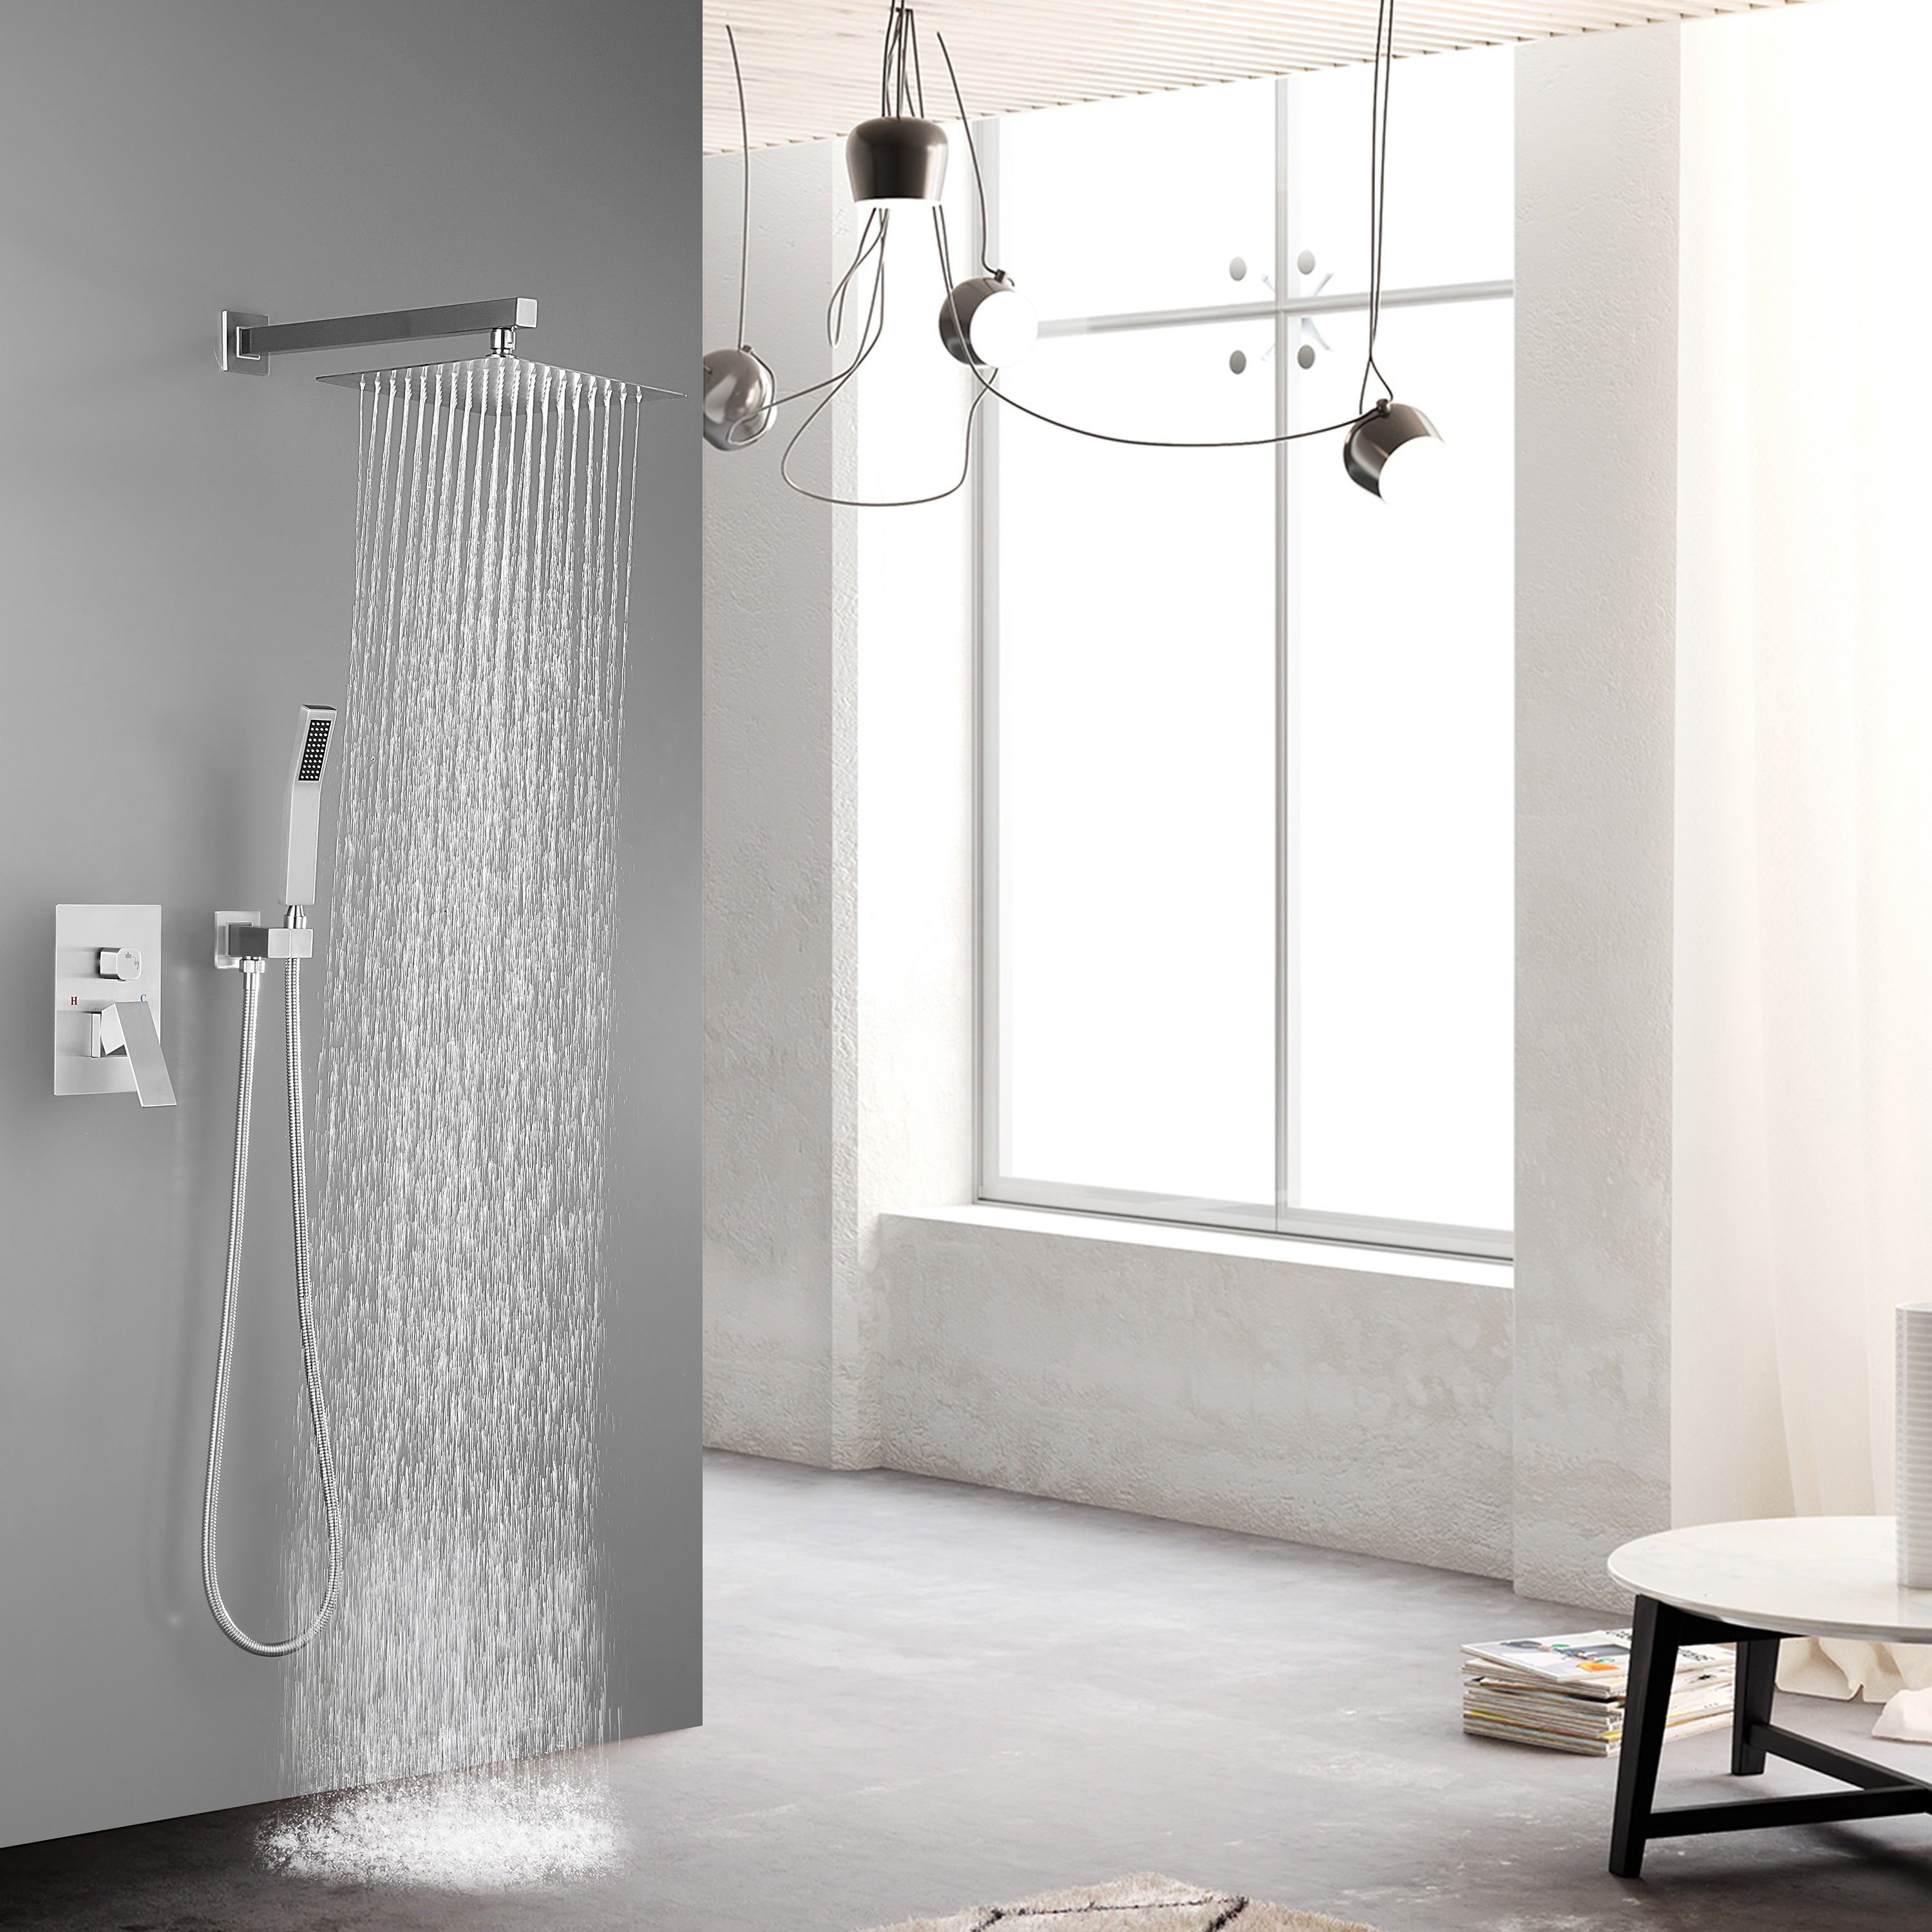 ZNTS 10 inch Shower Head Bathroom Luxury Rain Mixer Shower Complete Combo Set Wall Mounted W928105285